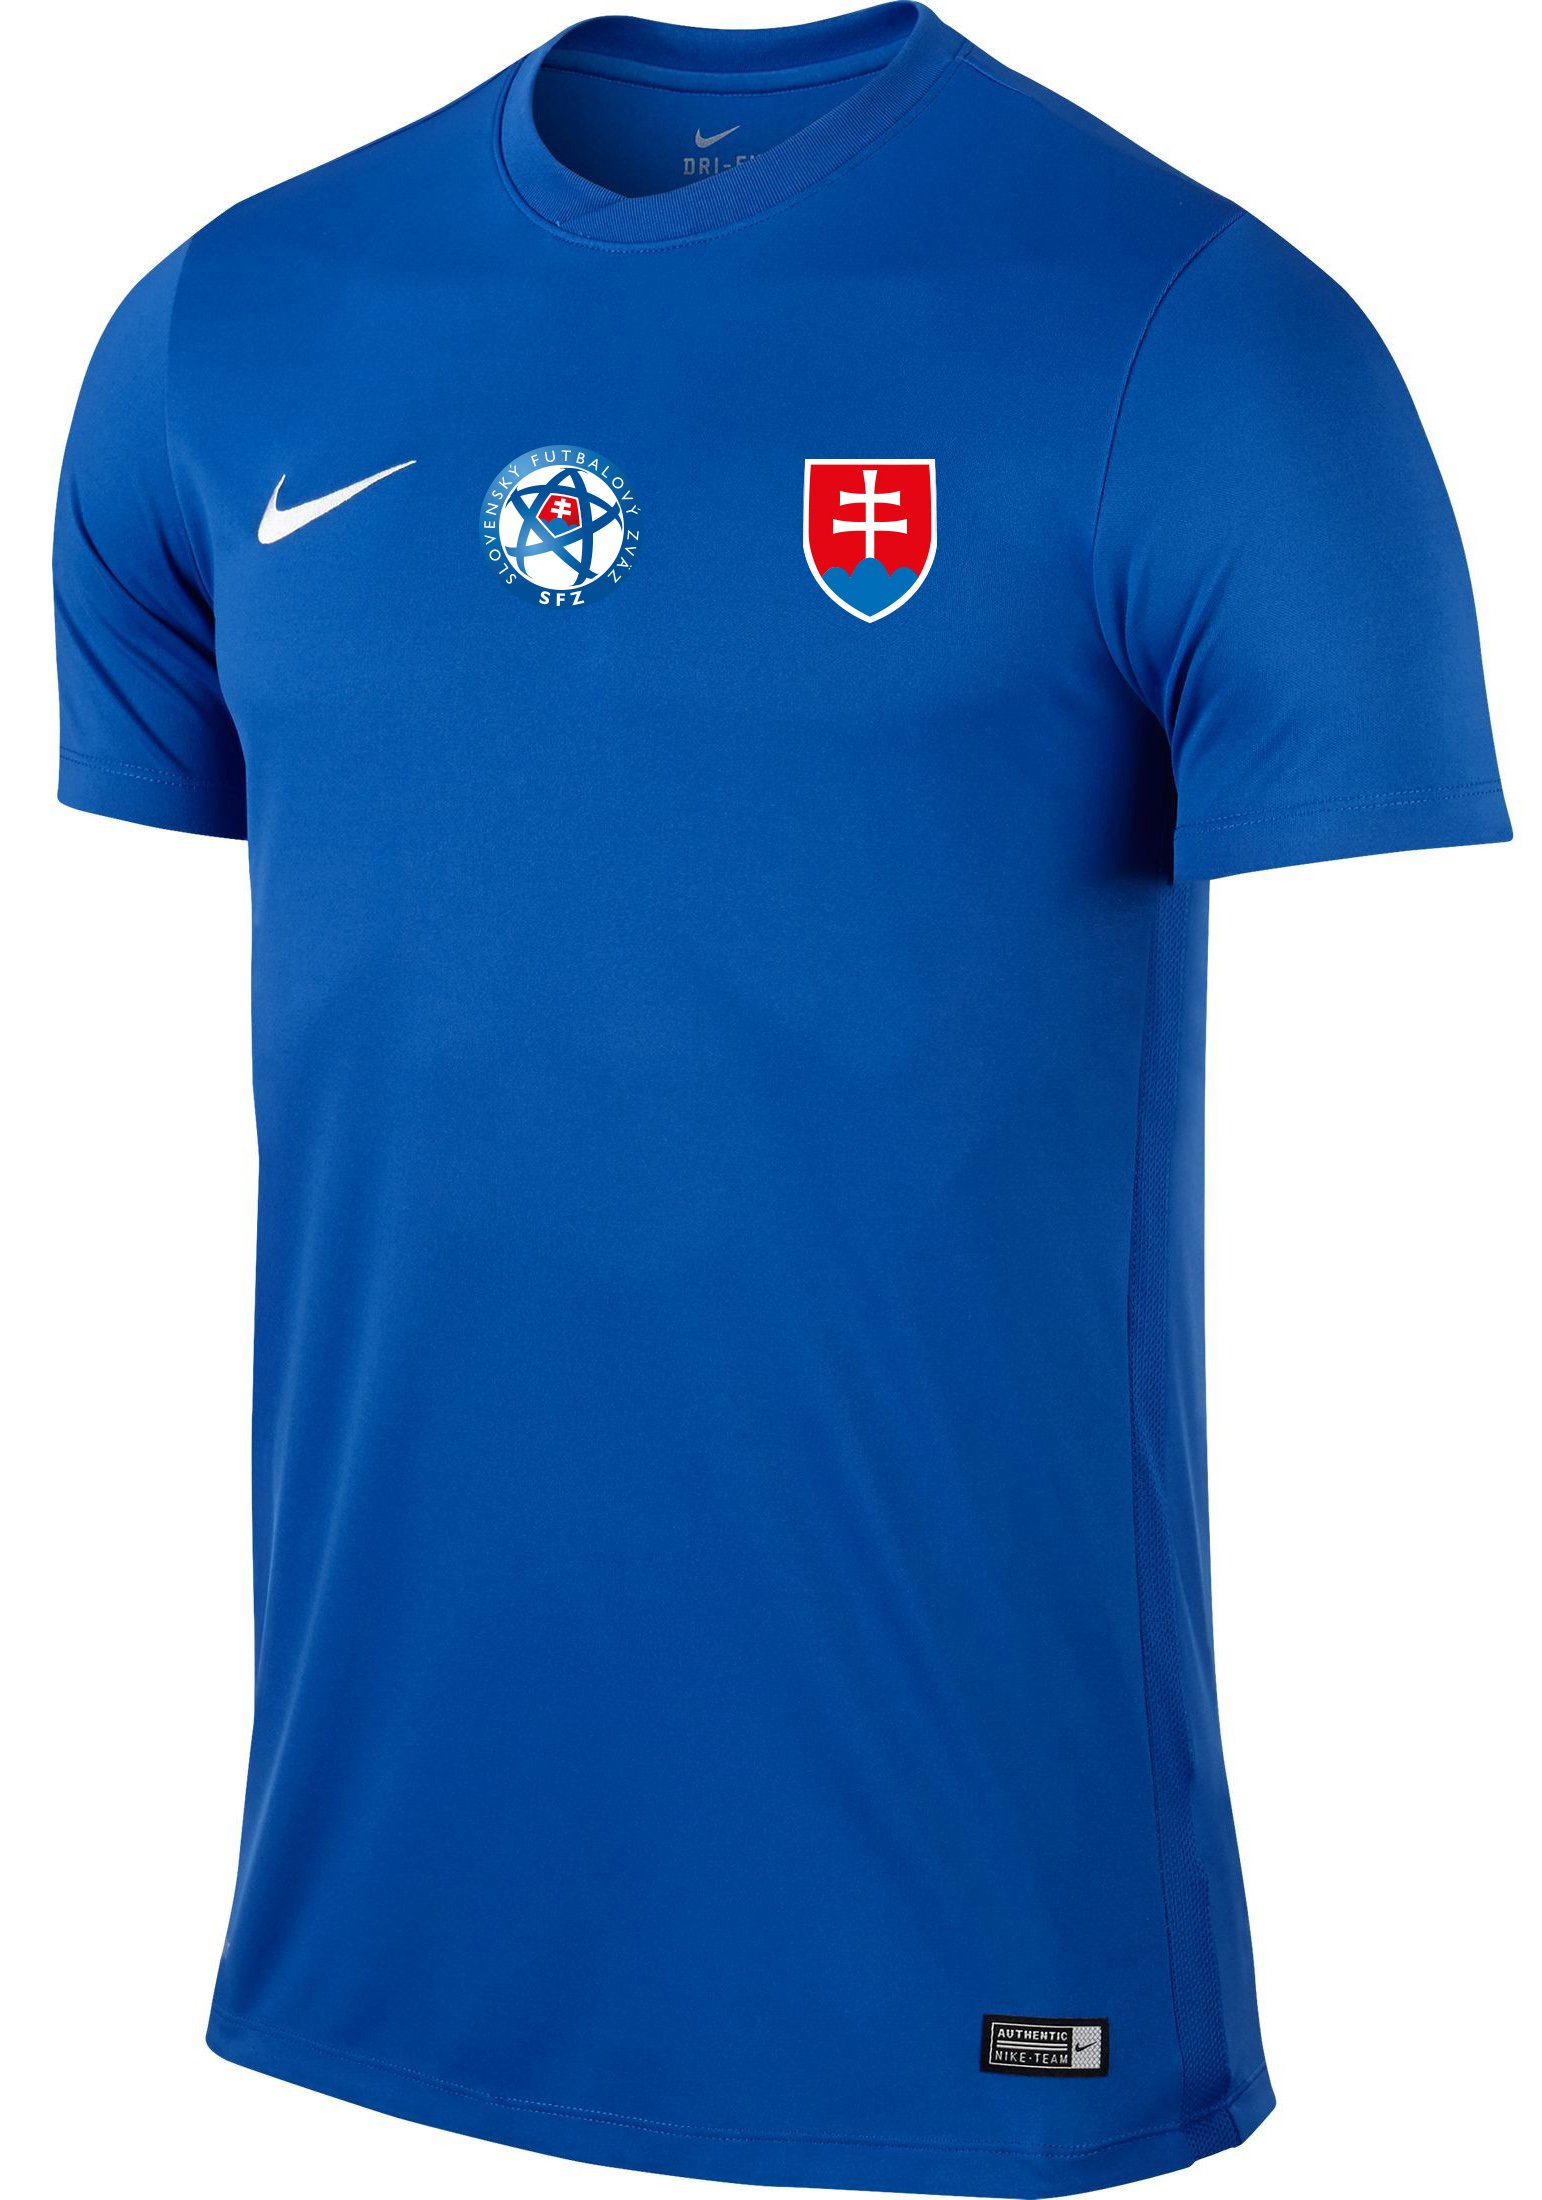 Camiseta Nike Slovakia Replica Away Football Jersey 2016/2017